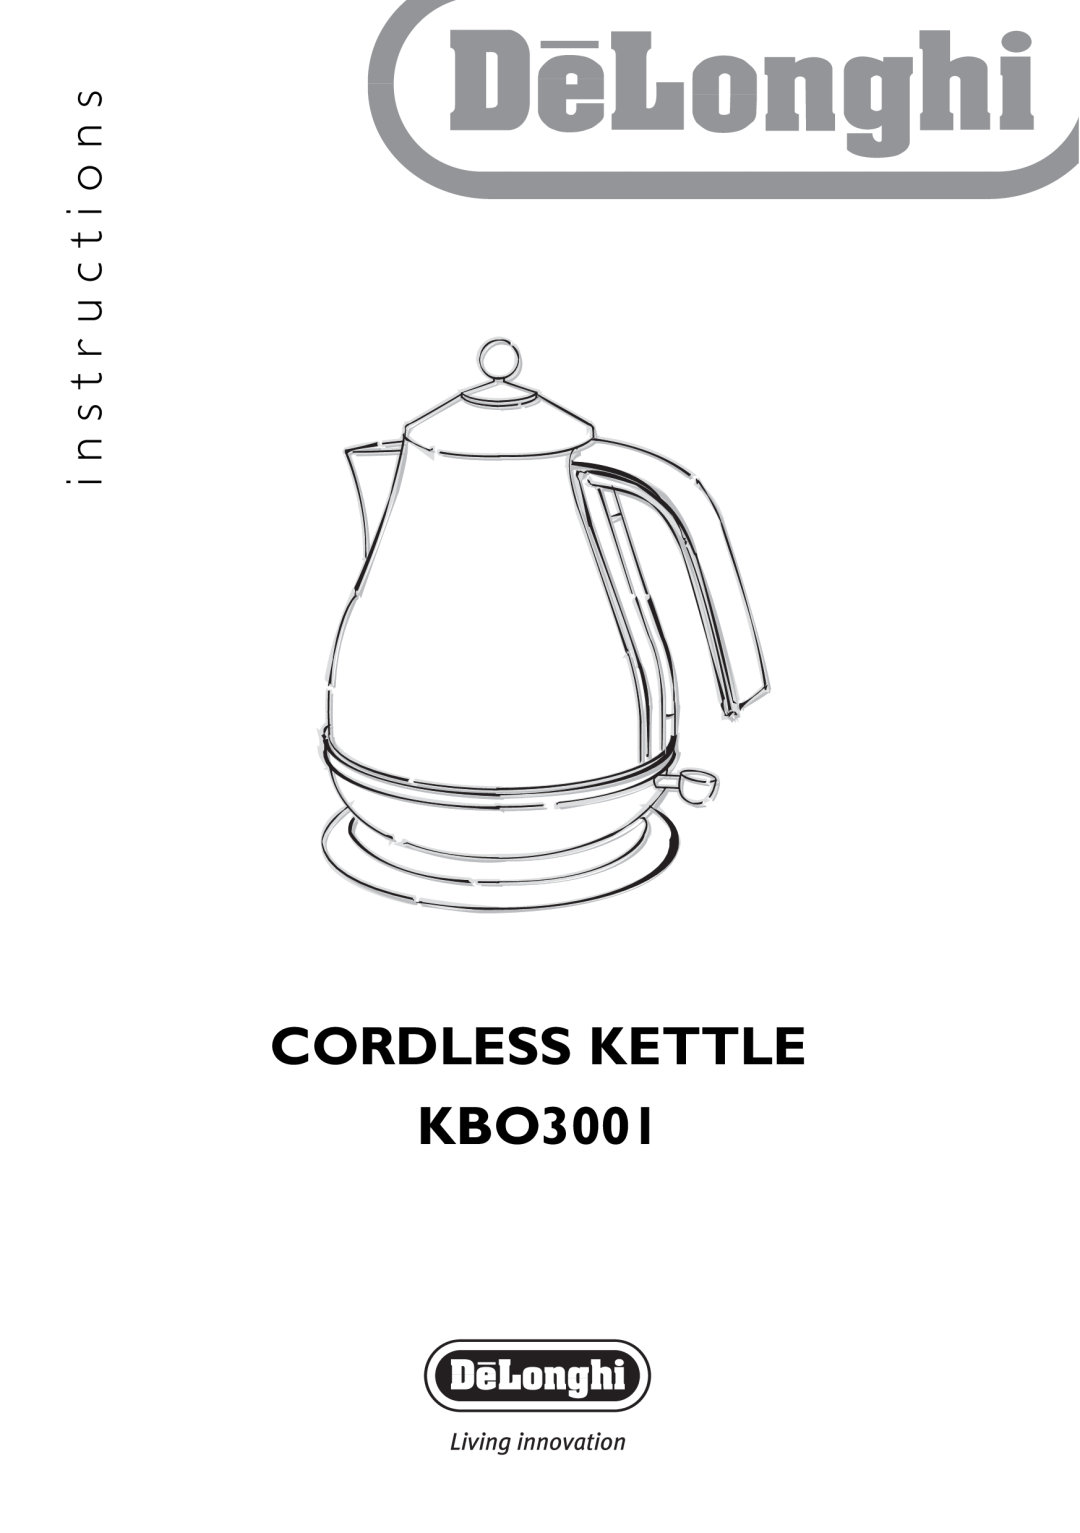 DeLonghi KBO3001 manual Cordless Kettle, i n s t r u c t i o n s 